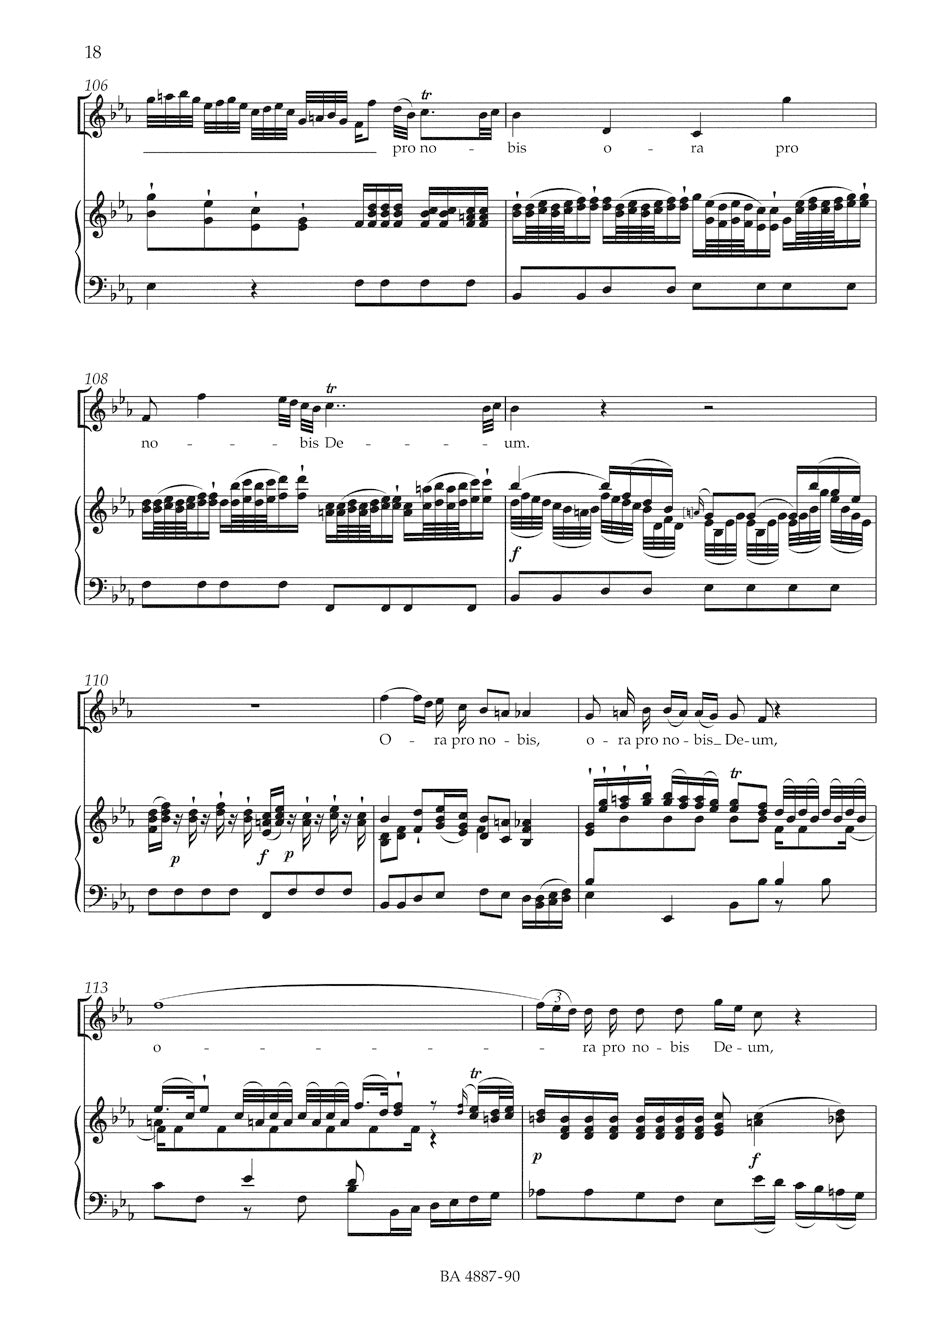 Mozart Regina coeli B-flat major K. 127